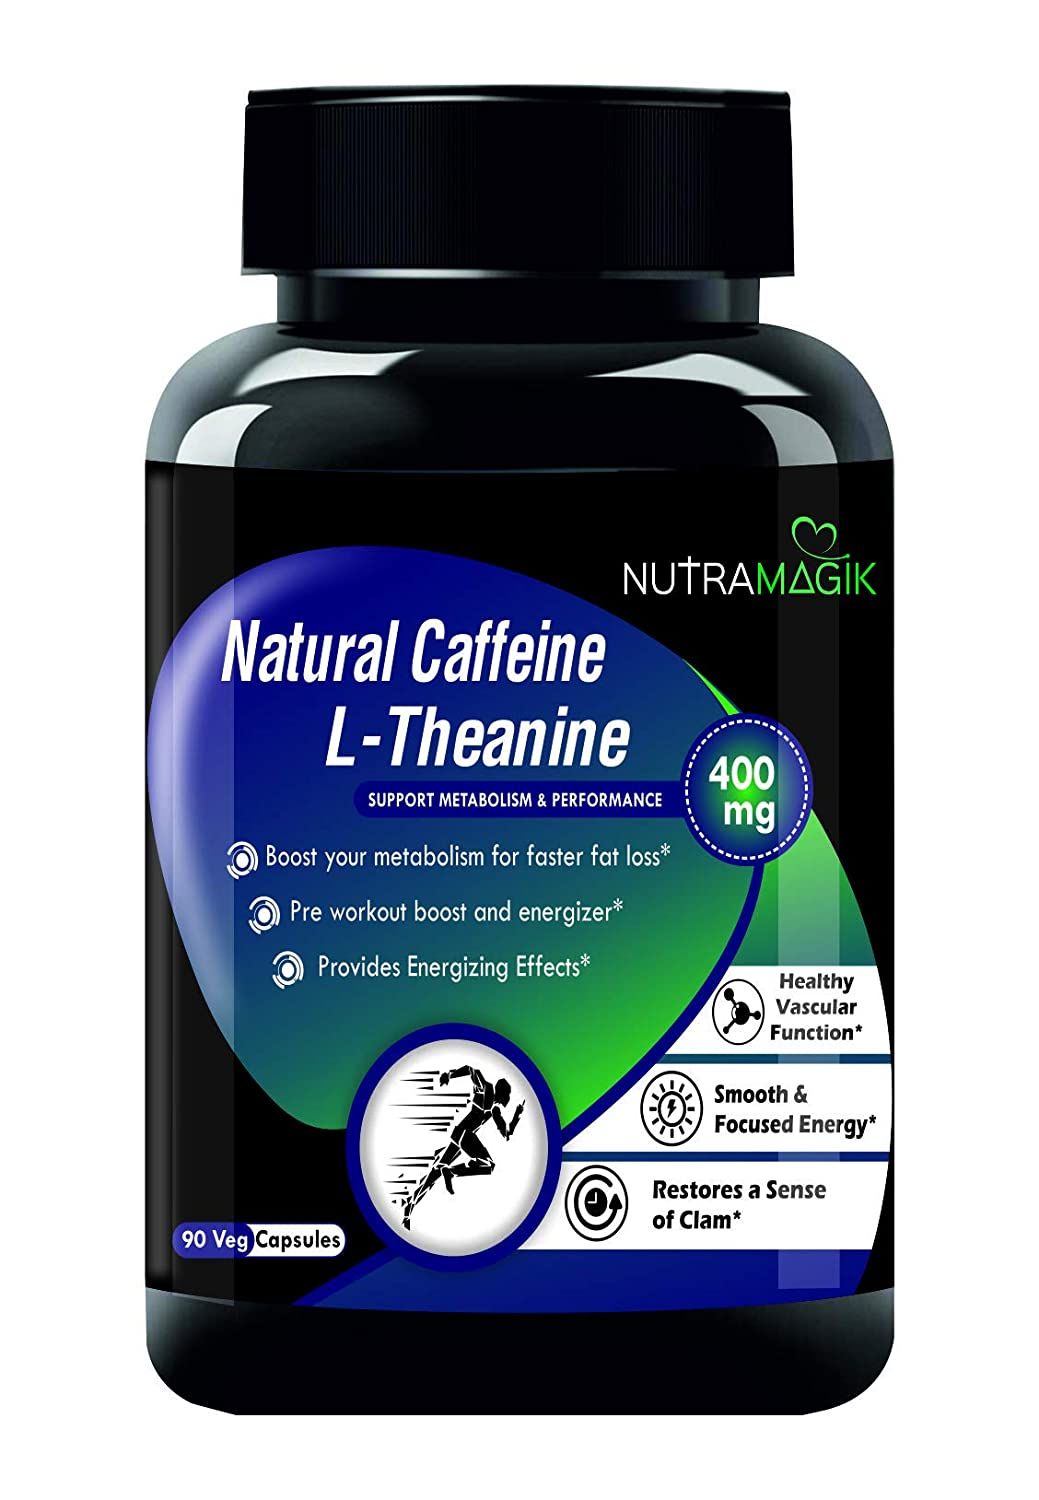 Nutramagik Natural Caffeine Plus L-Theanine Image